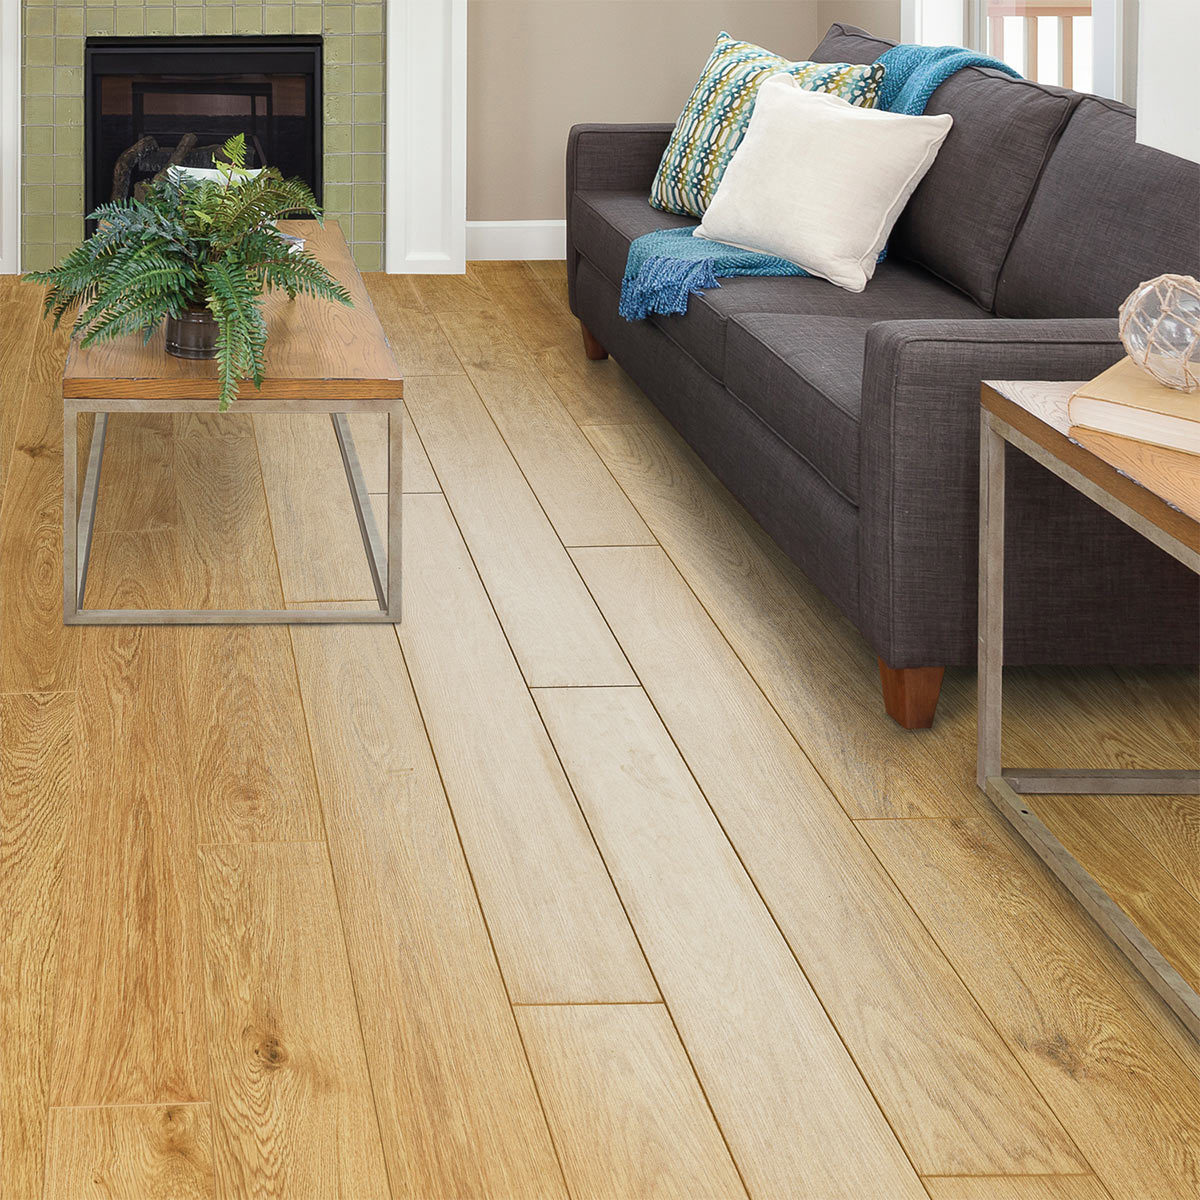 Golden Select Nottingham Oak Laminate, Costco Golden Select Laminate Flooring Reviews